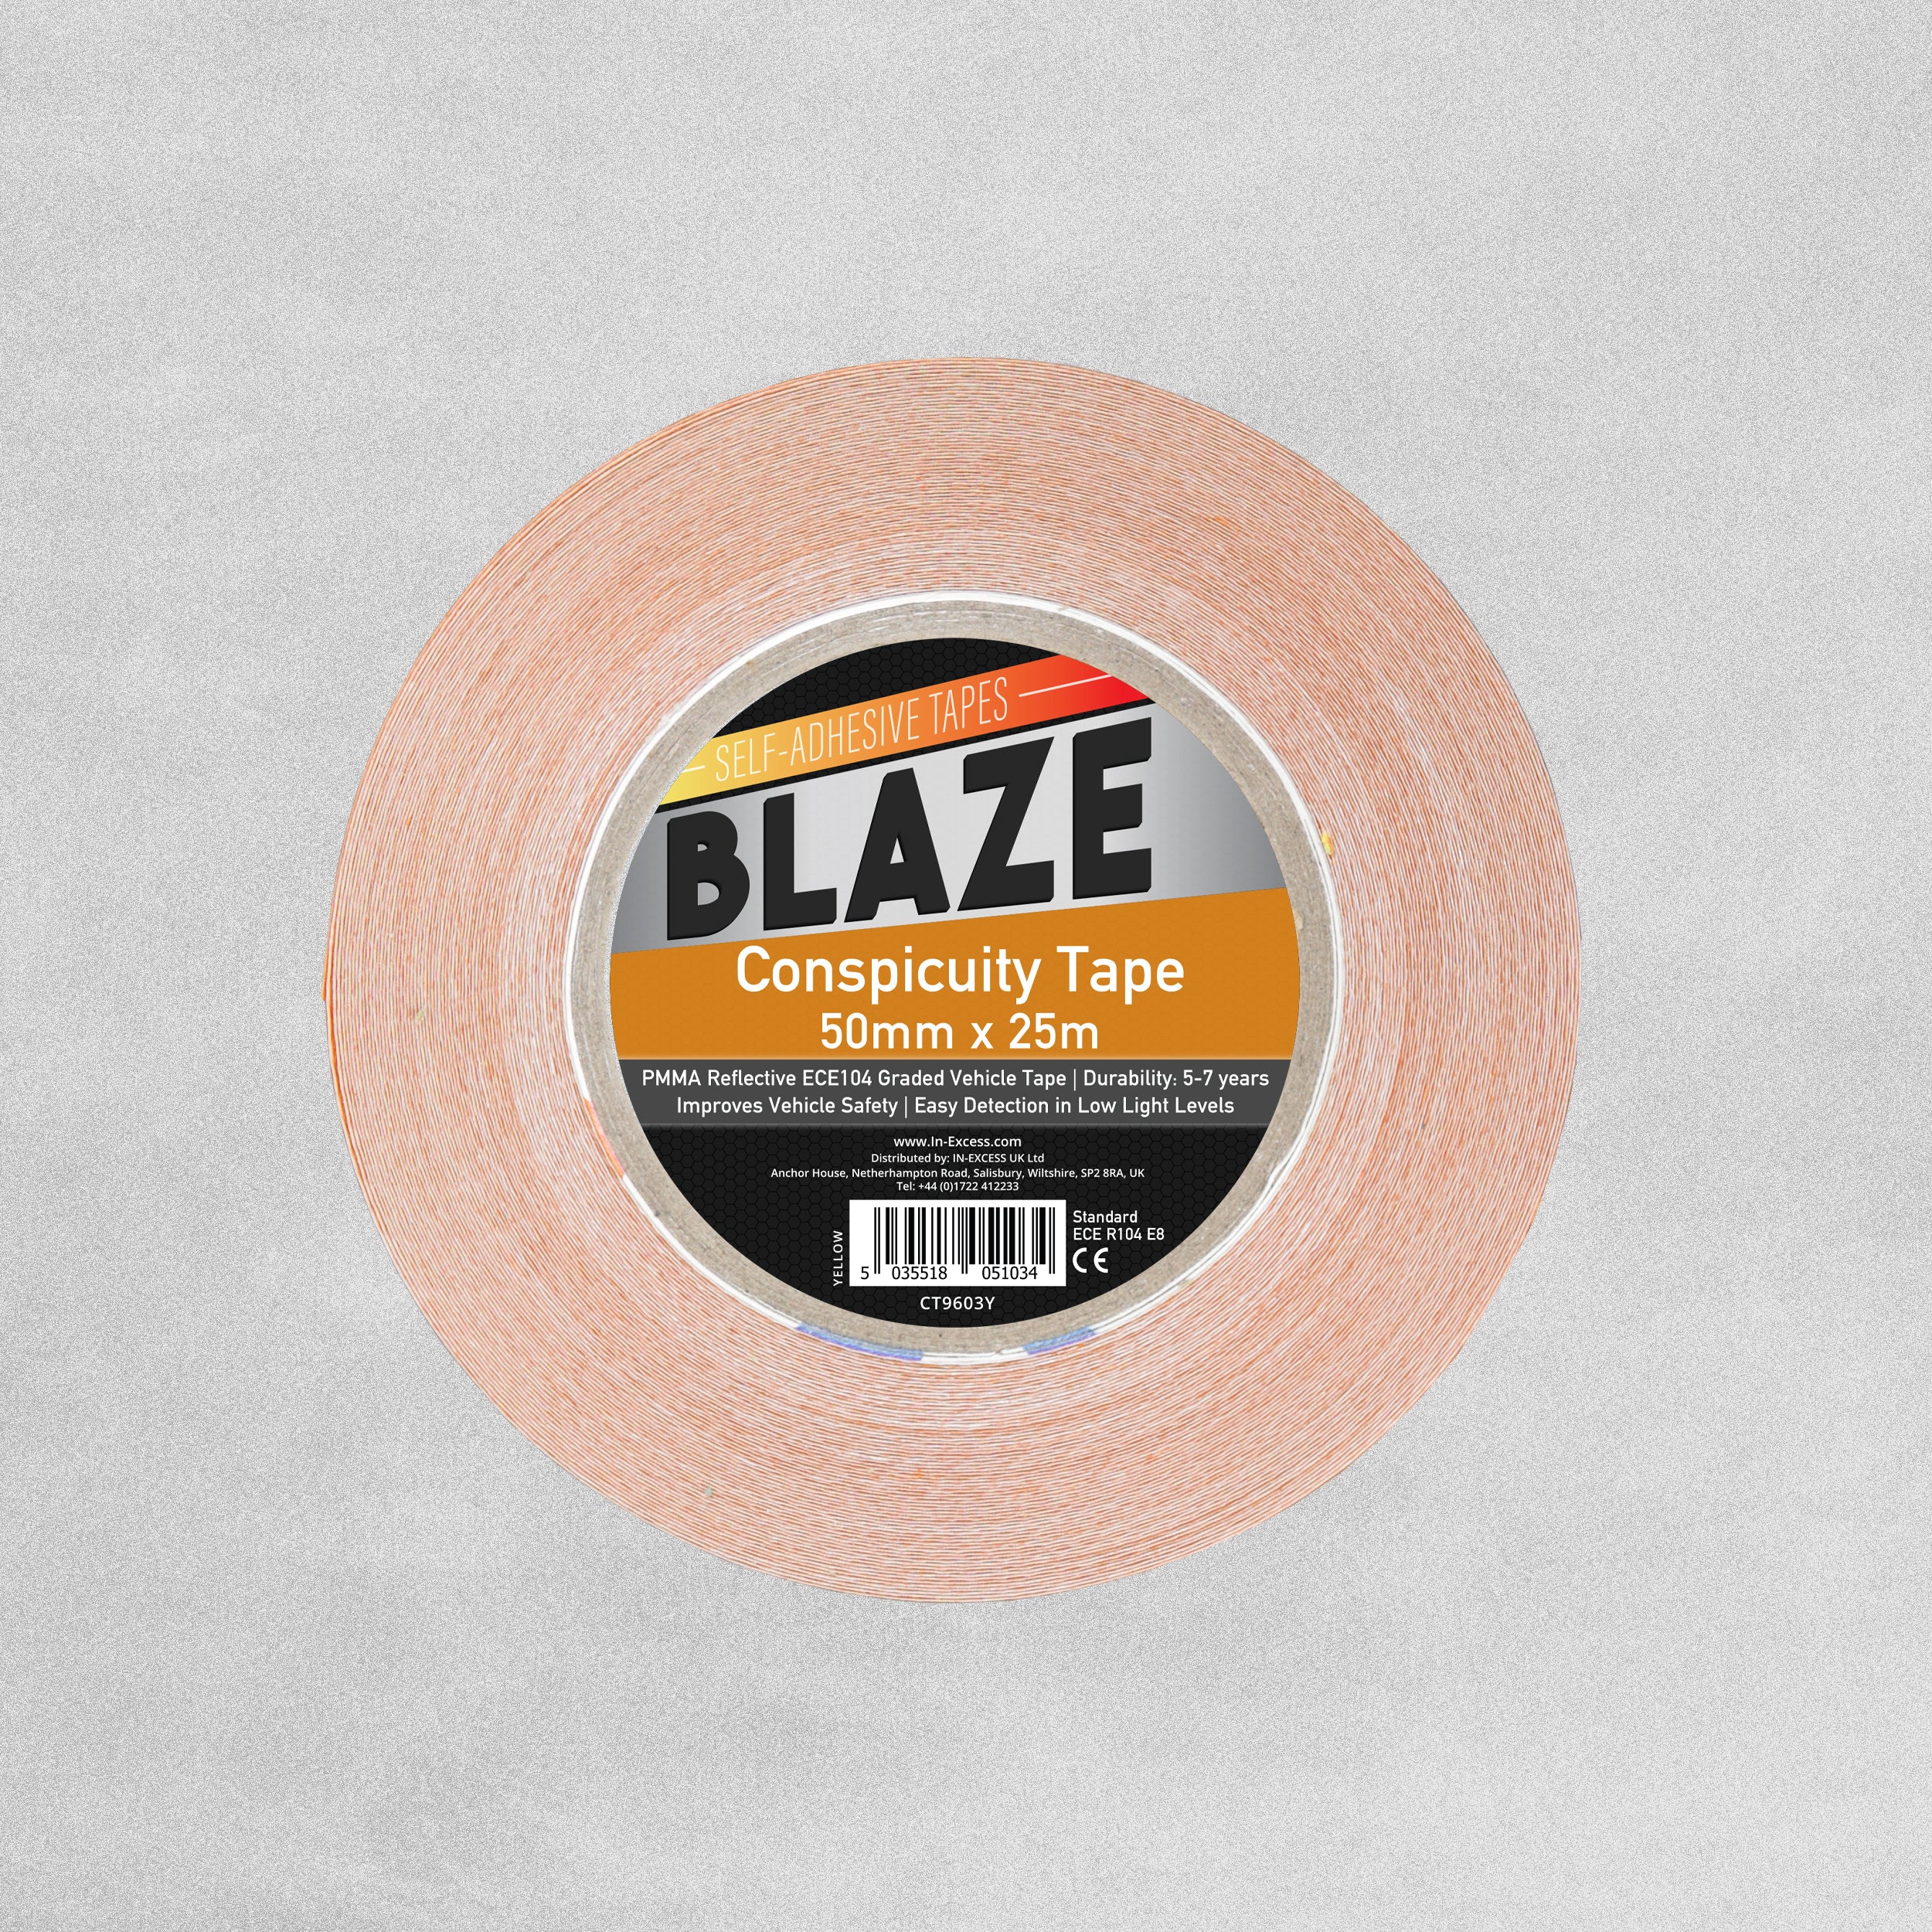 Blaze Vehicle Conspicuity Tape 50mm x 25m - Yellow